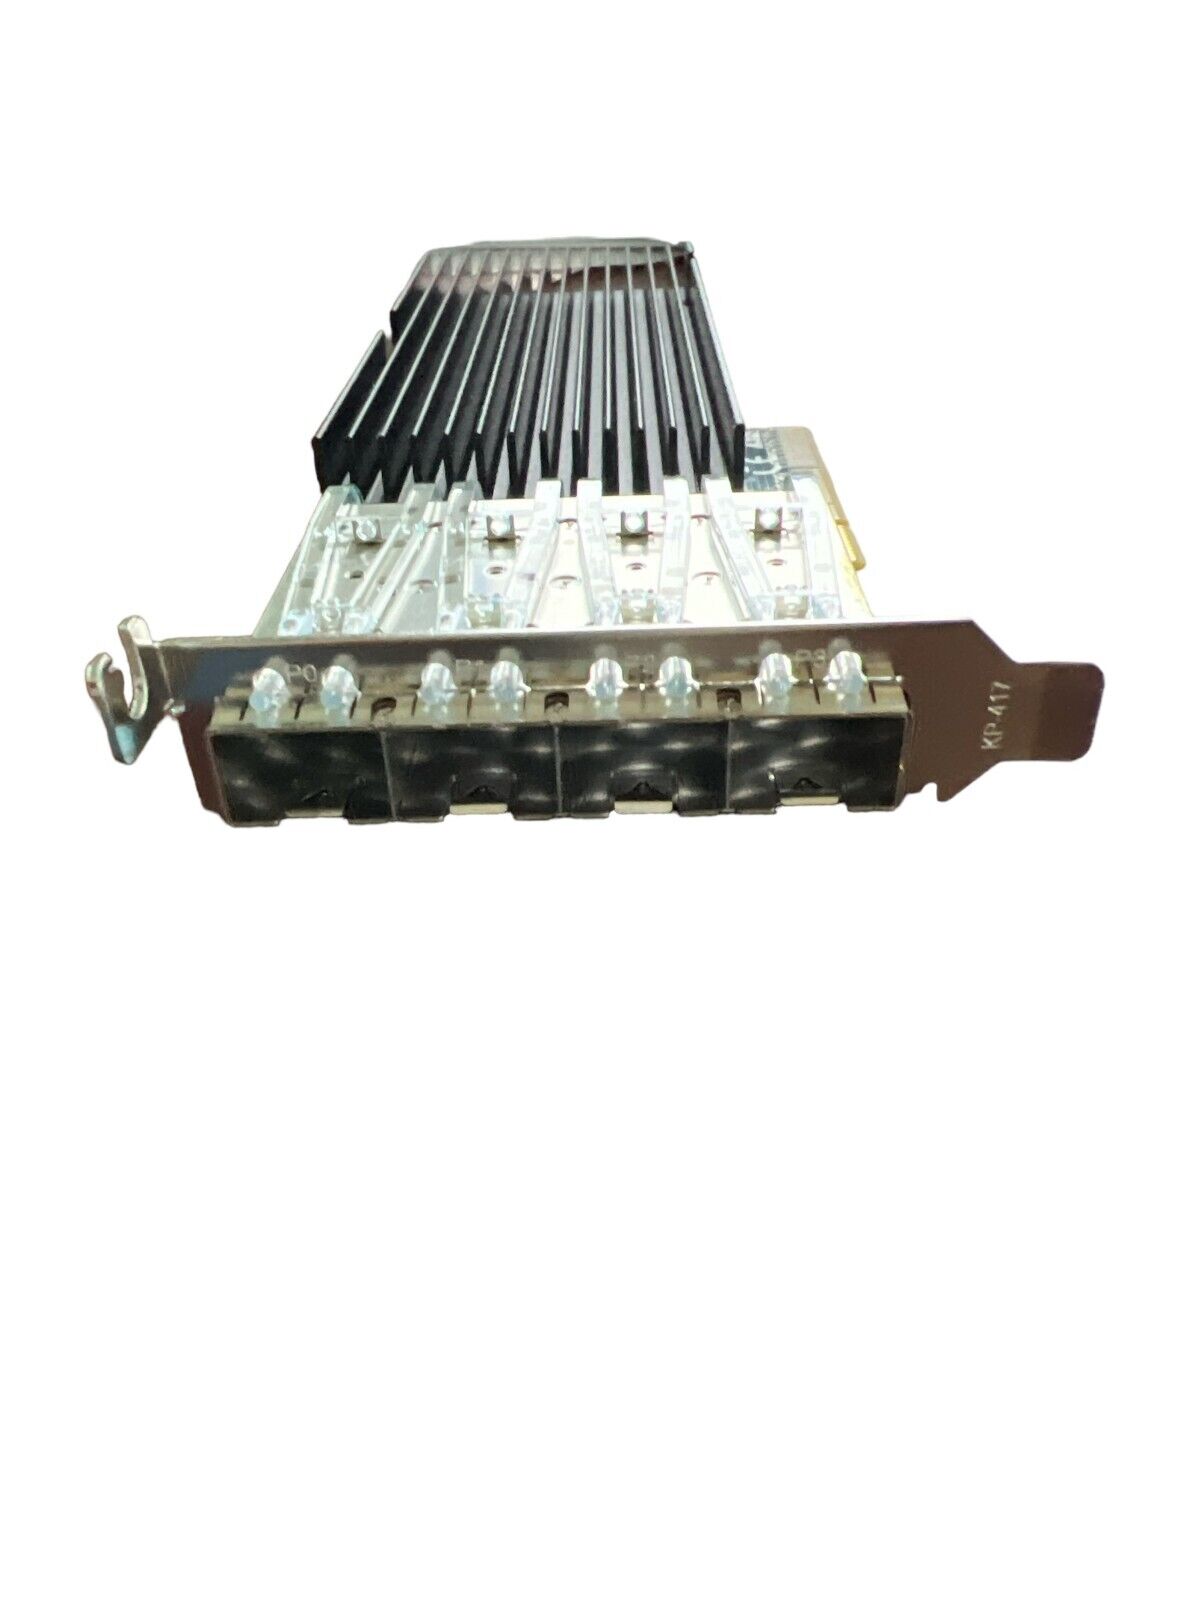 Silicom PE310G4SPI9LB-XR-FE (Low Profile) 4 Port 10 Gb/s SFP+ NIC